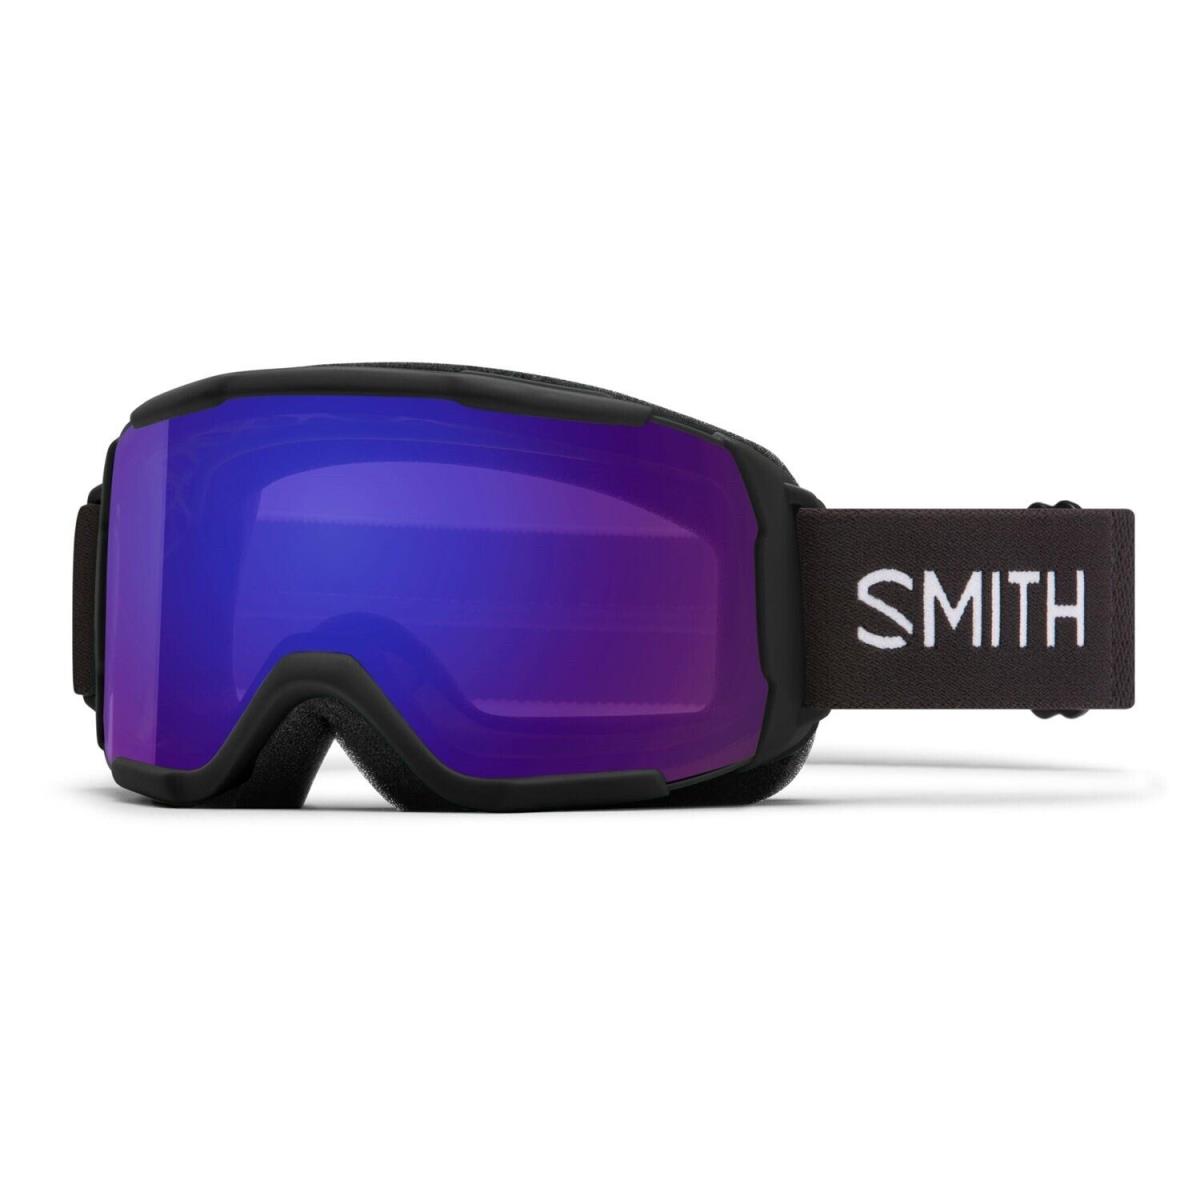 Smith Showcase Otg Ski / Snow Goggles Black Frame Everyday Violet Mirror Lens